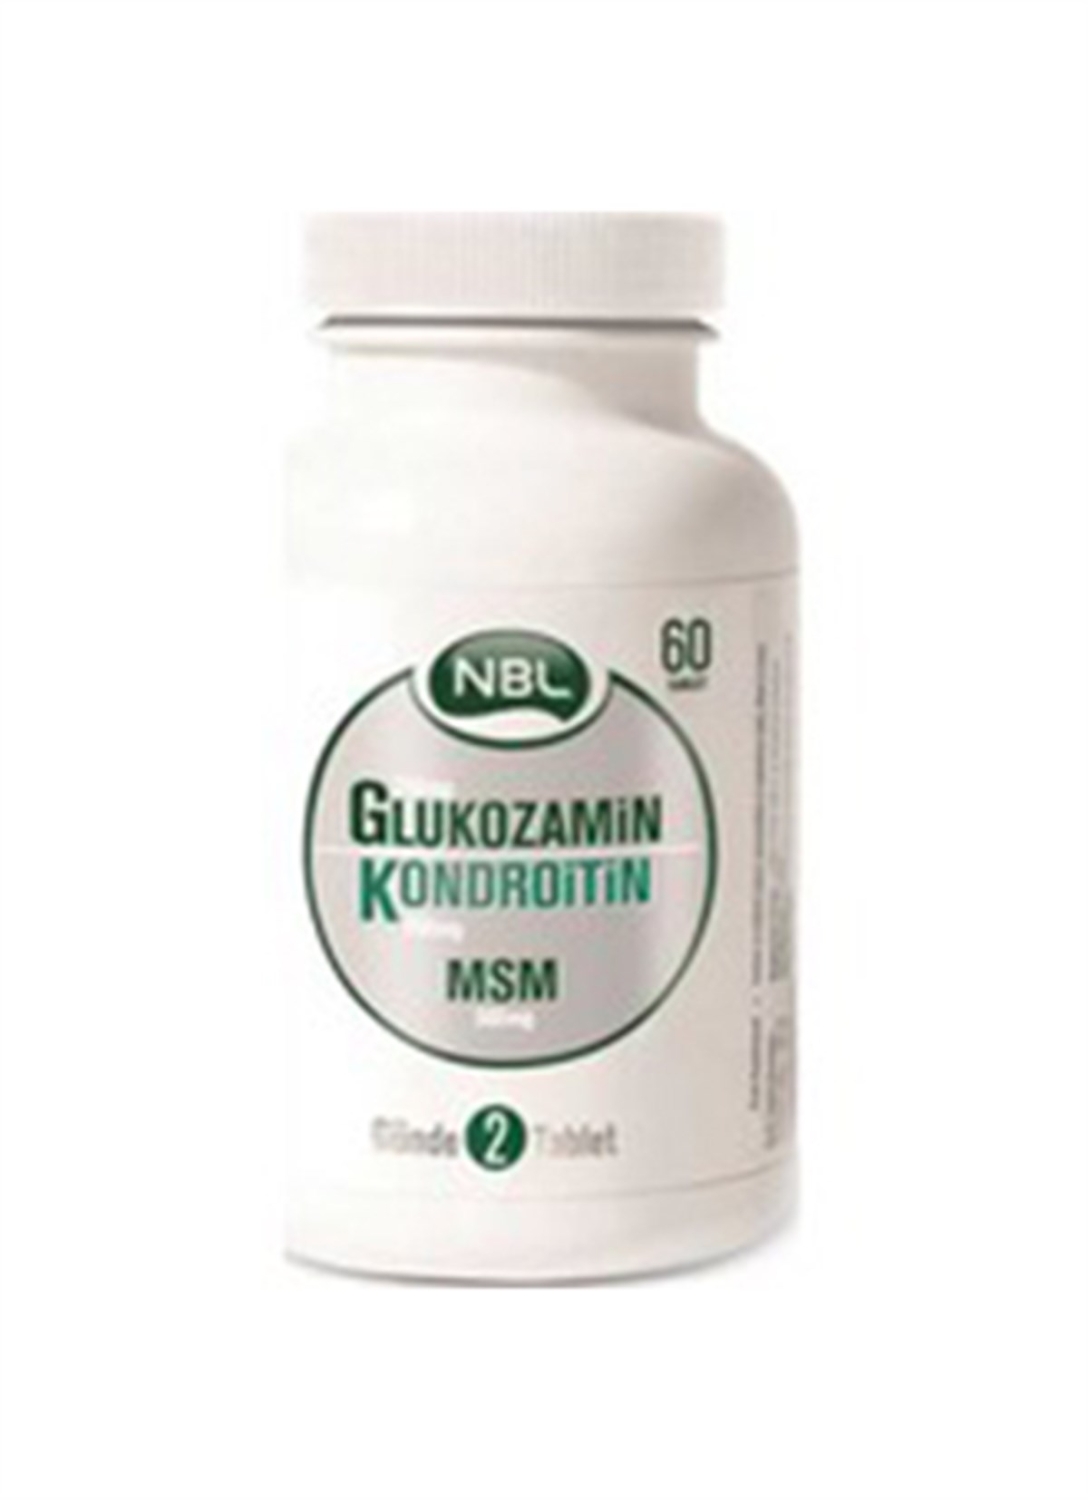 NBL Glukozamin Kondroitin MSM 60 Tablet - 1